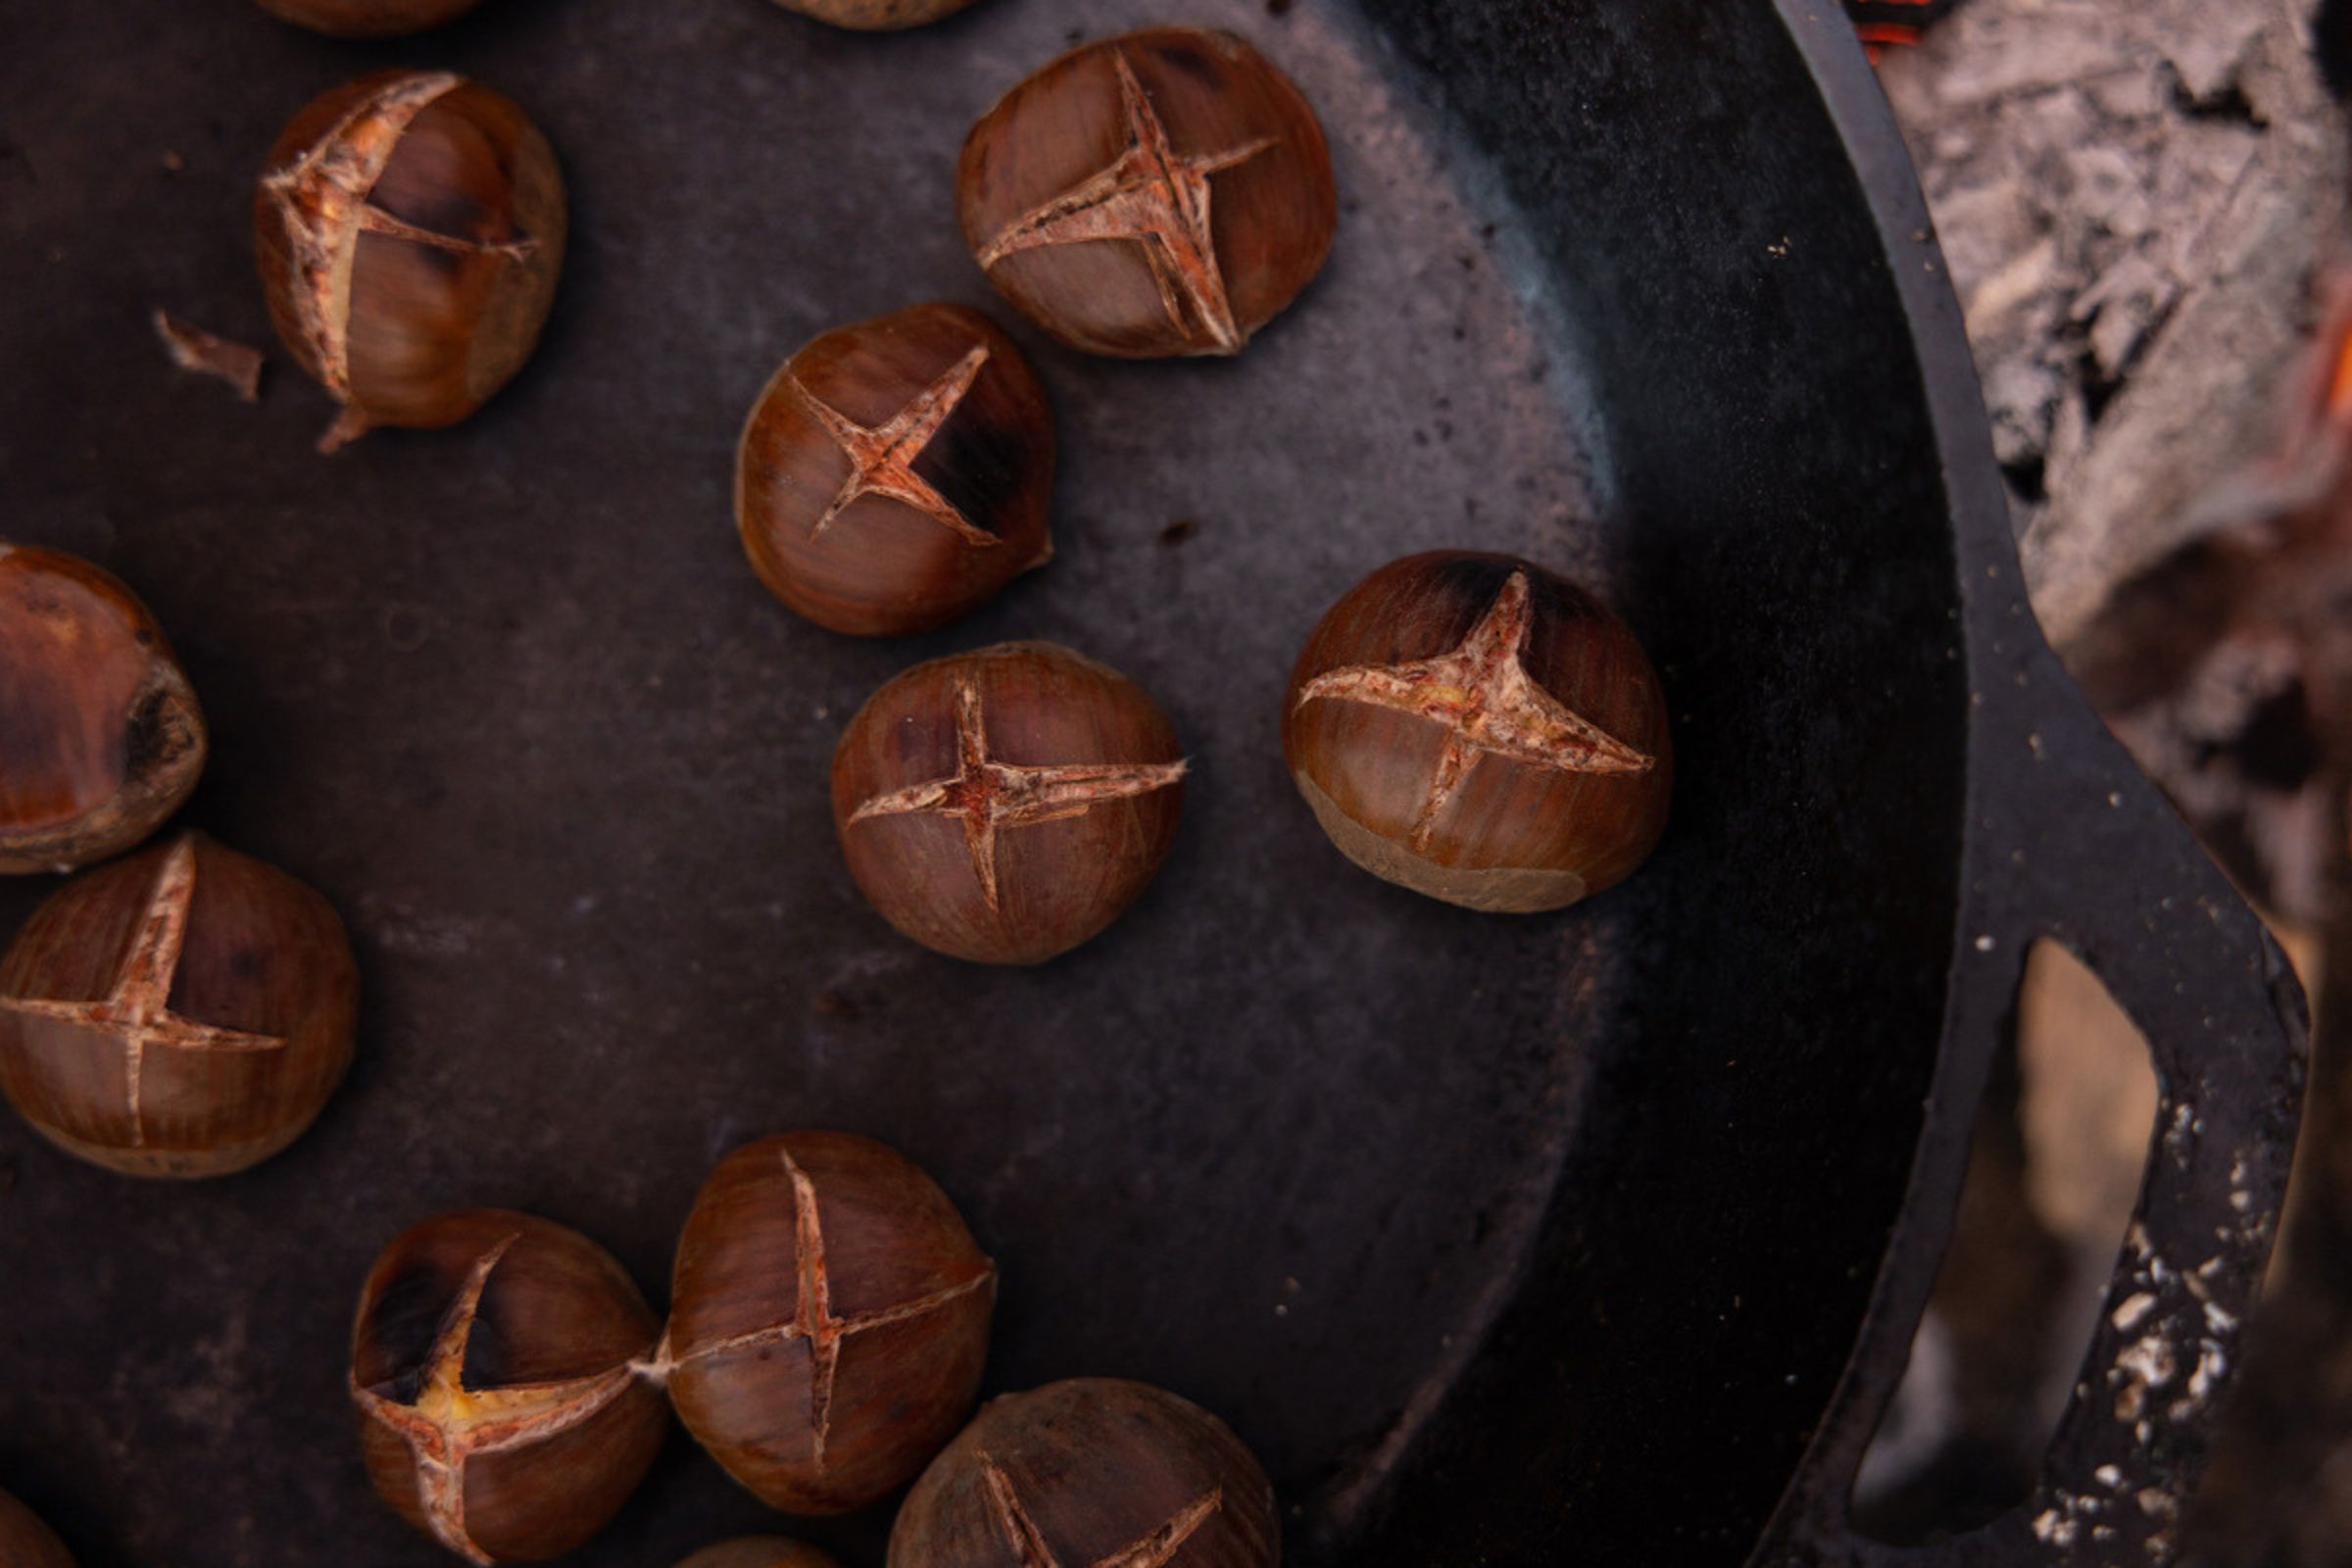 https://campspot.blog/wp-content/uploads/2022/11/how-to-roast-chestnuts-header1.jpg